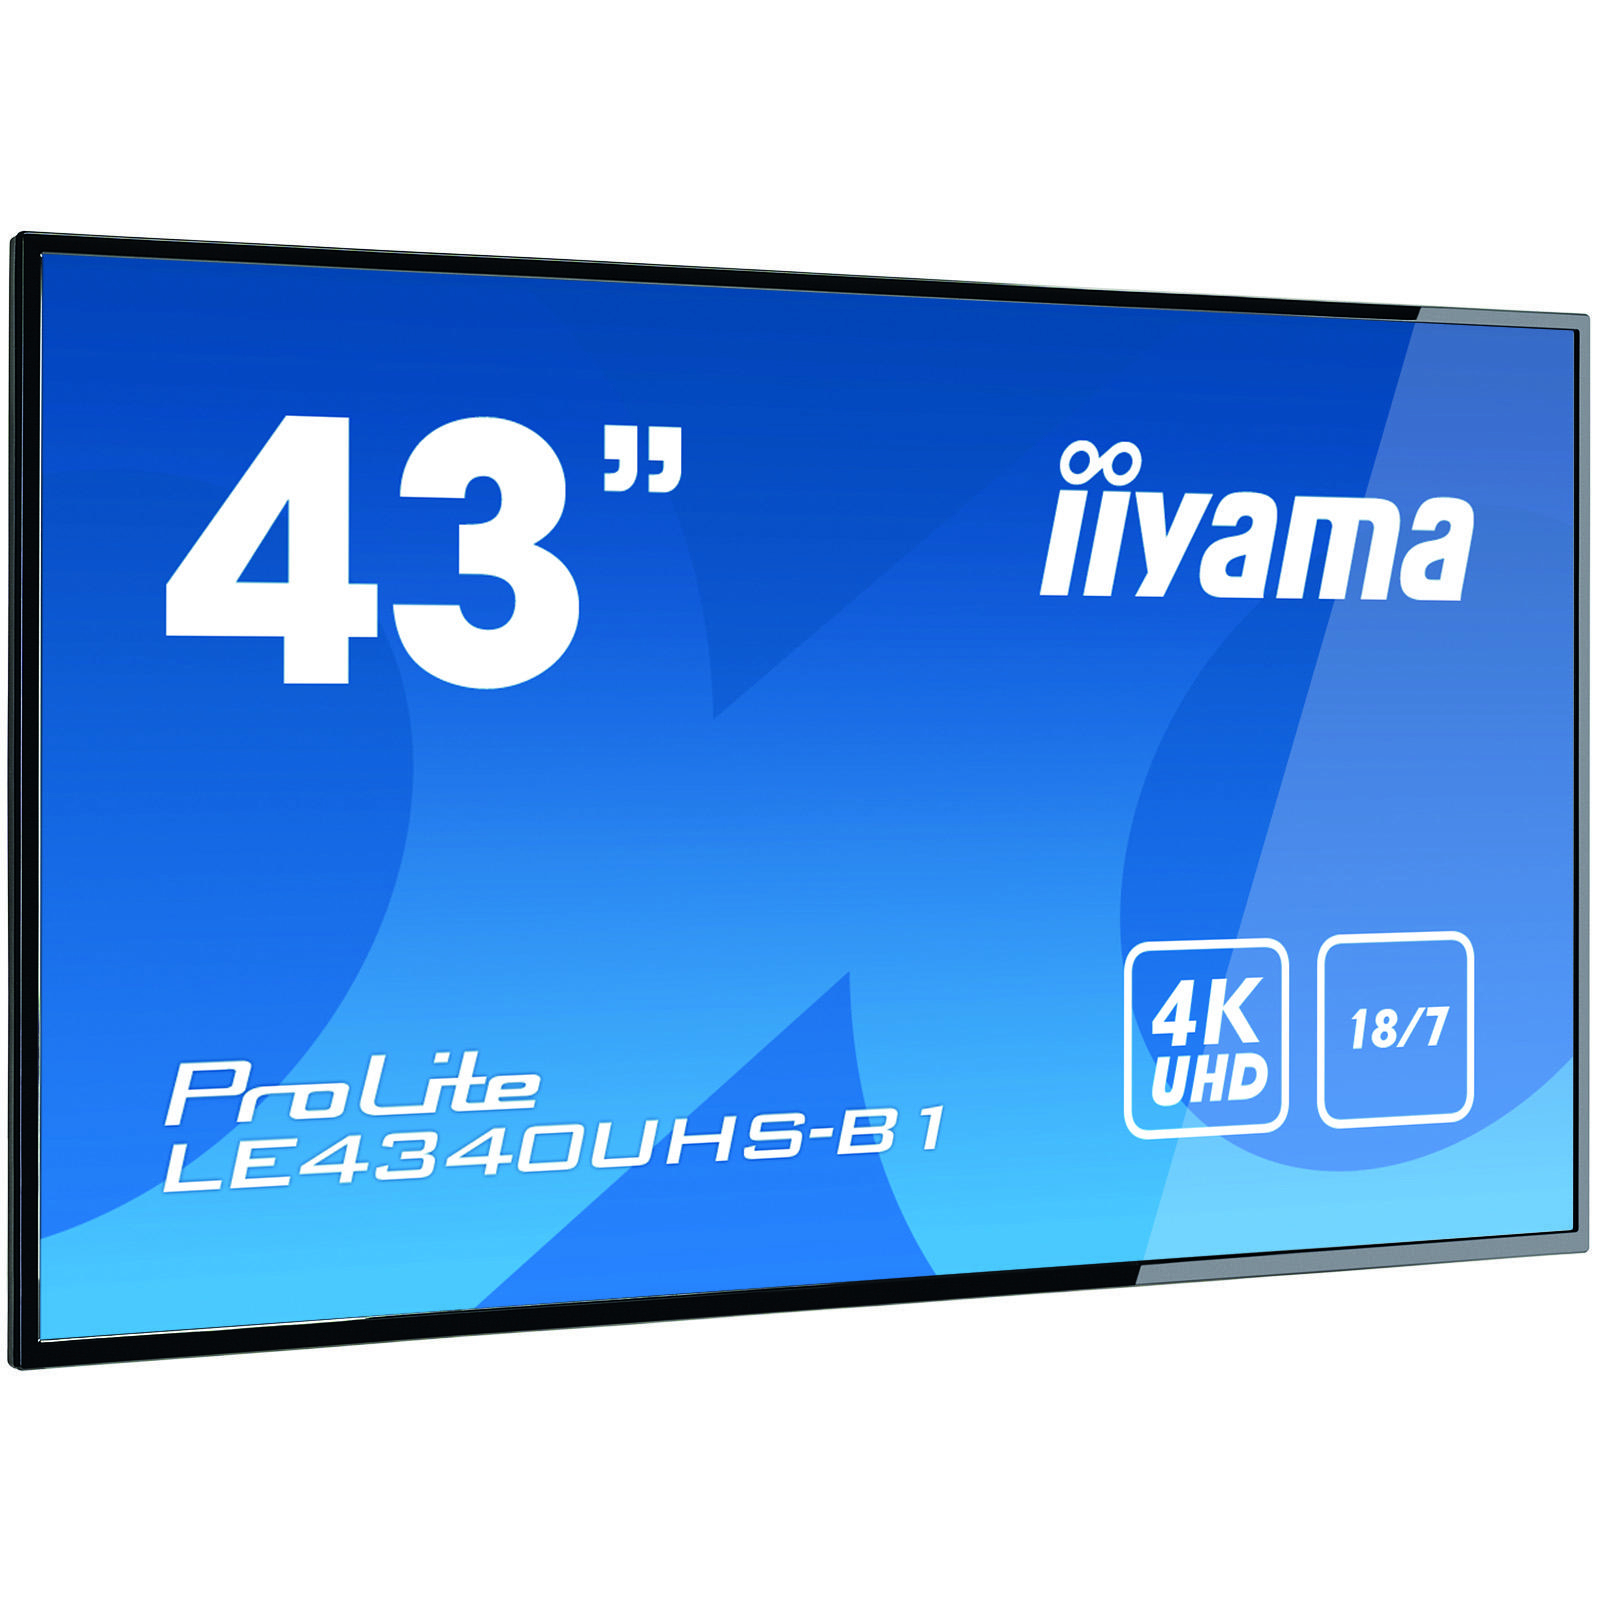 LCD панель iiyama LE4340UHS-B1 изображение 2